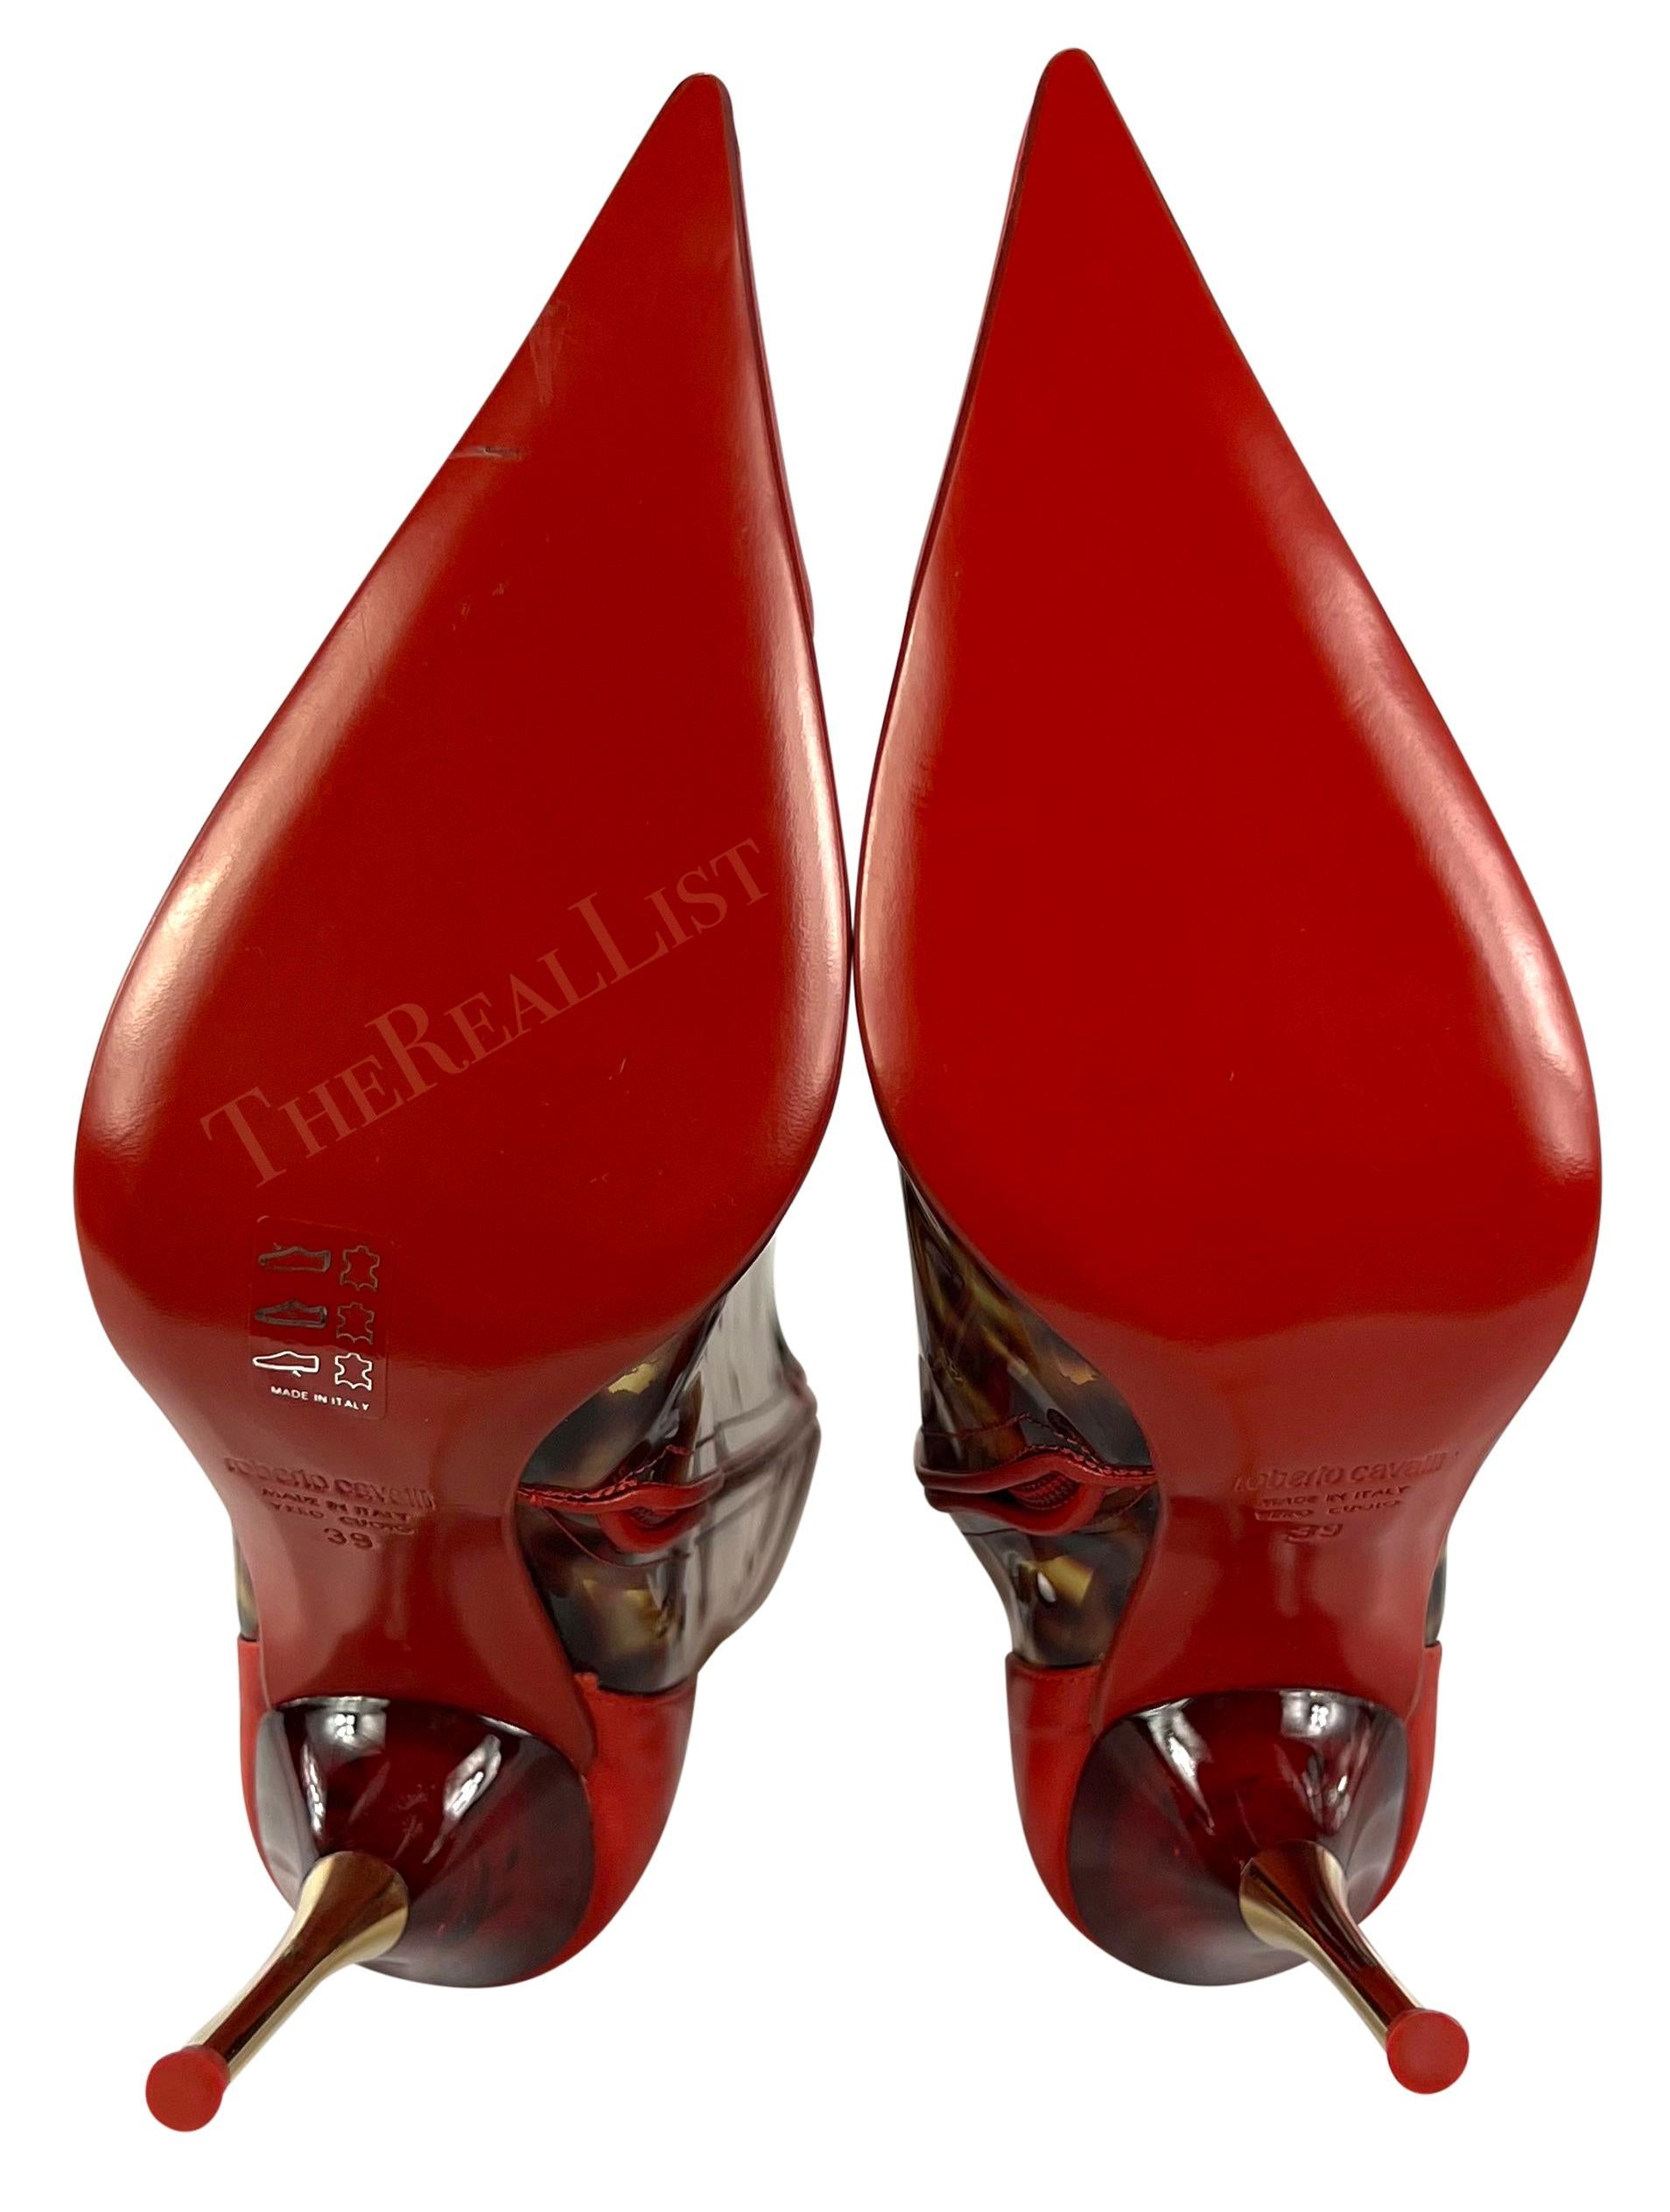 NWT S/S 2003 Roberto Cavalli Cheetah Print PVC Transparent Boots Size 39 For Sale 5